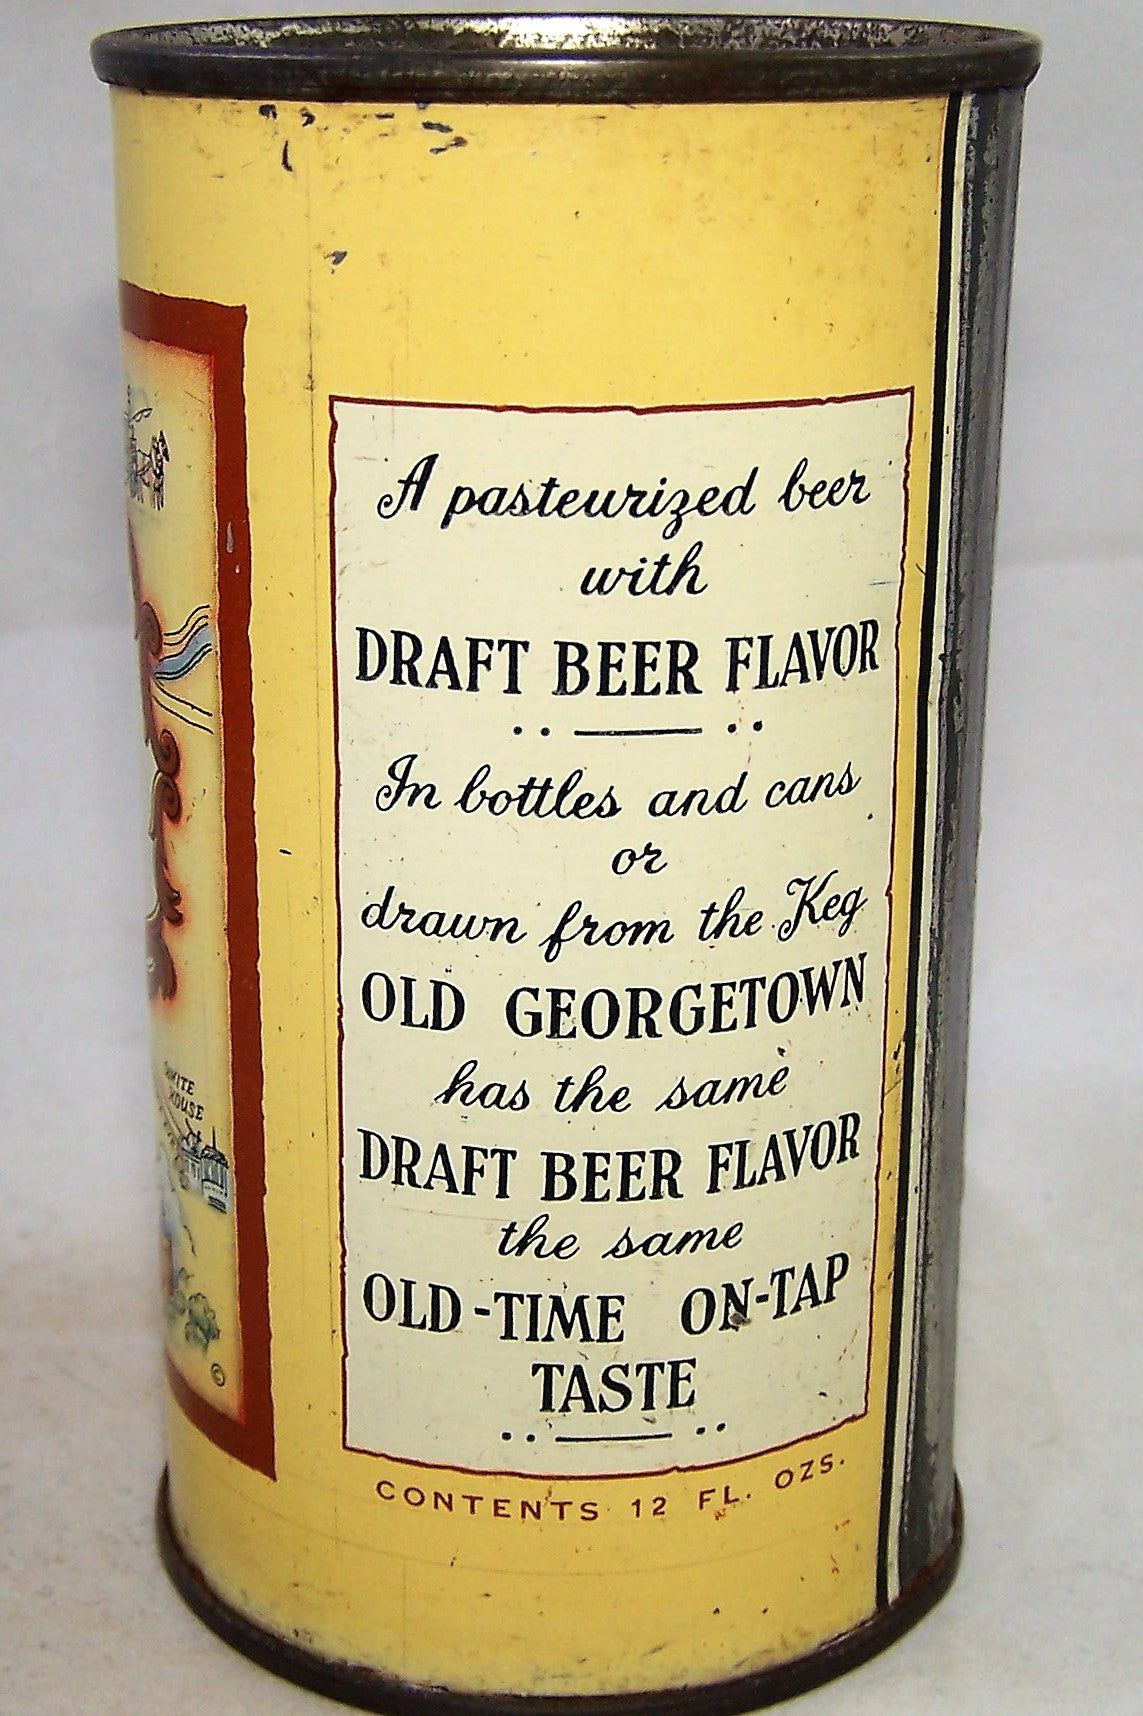 Old Georgetown Premium Beer, USBC 106-16, Grade 1- Sold on 05/26/18